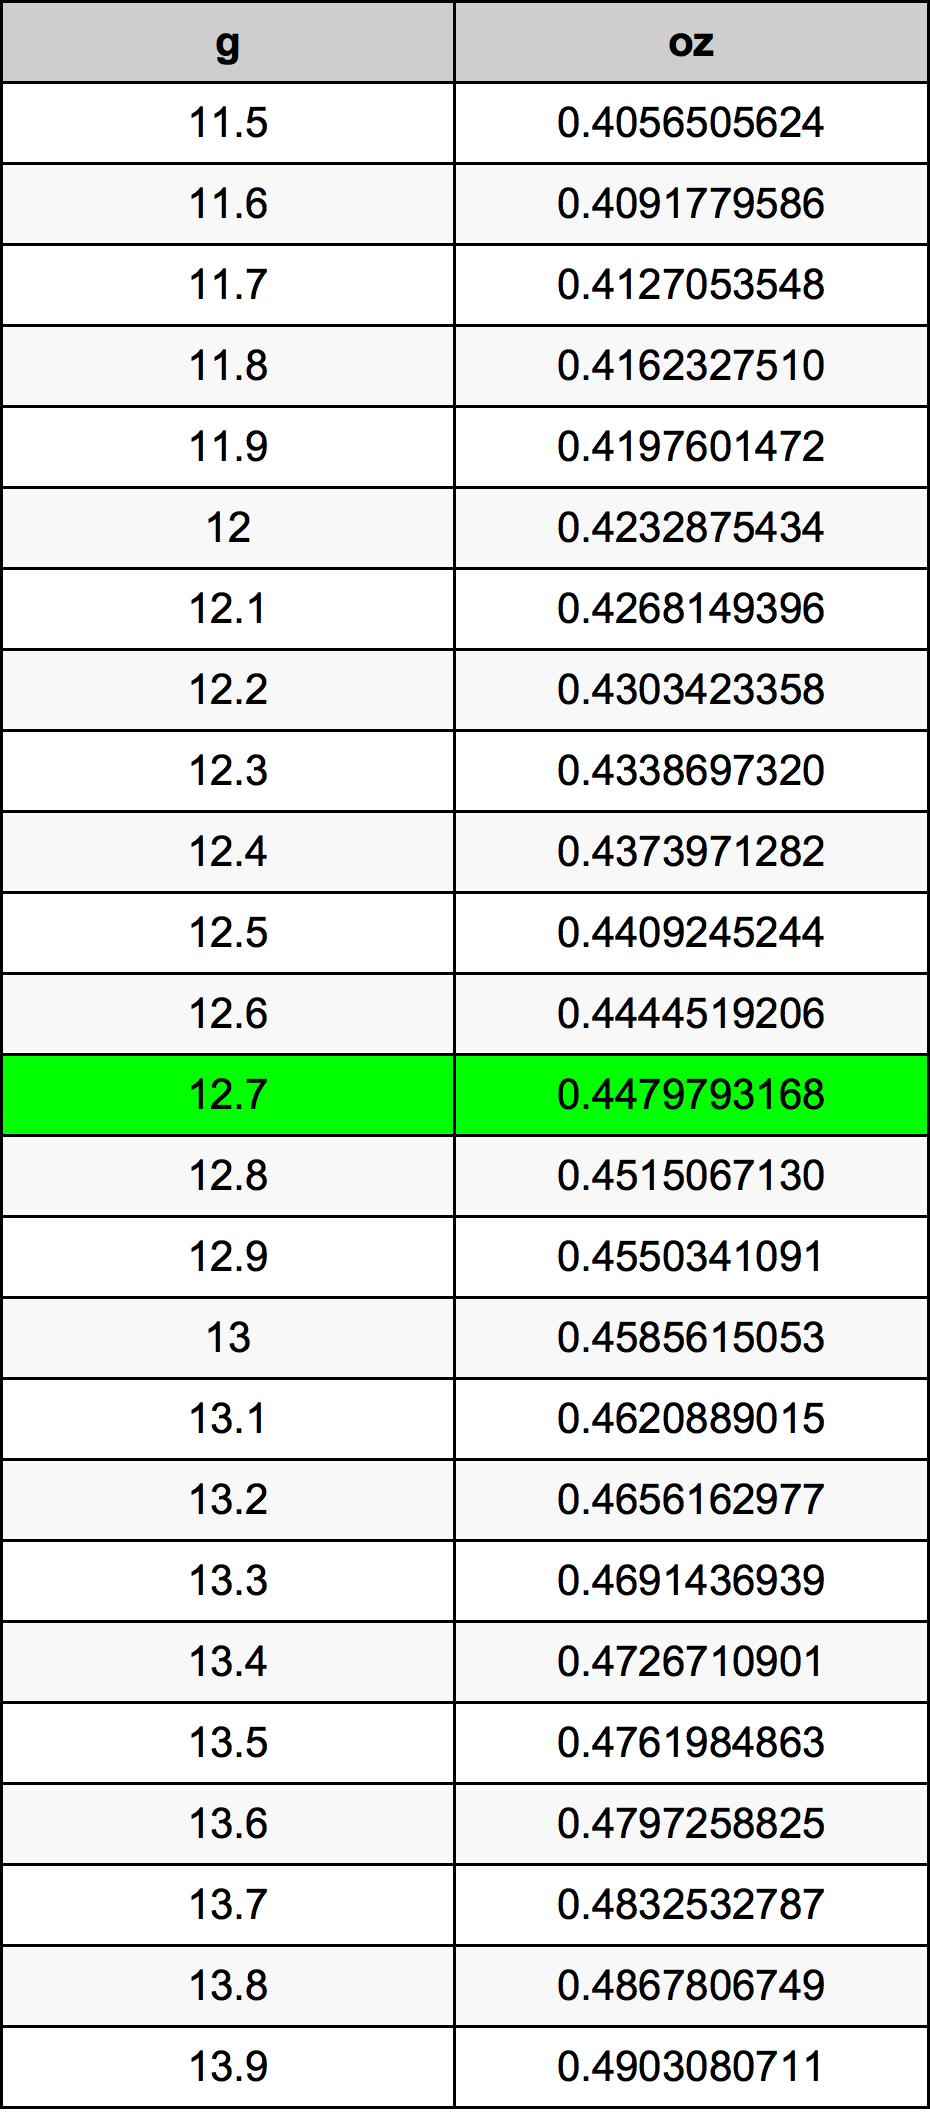 12.7 غرام جدول تحويل